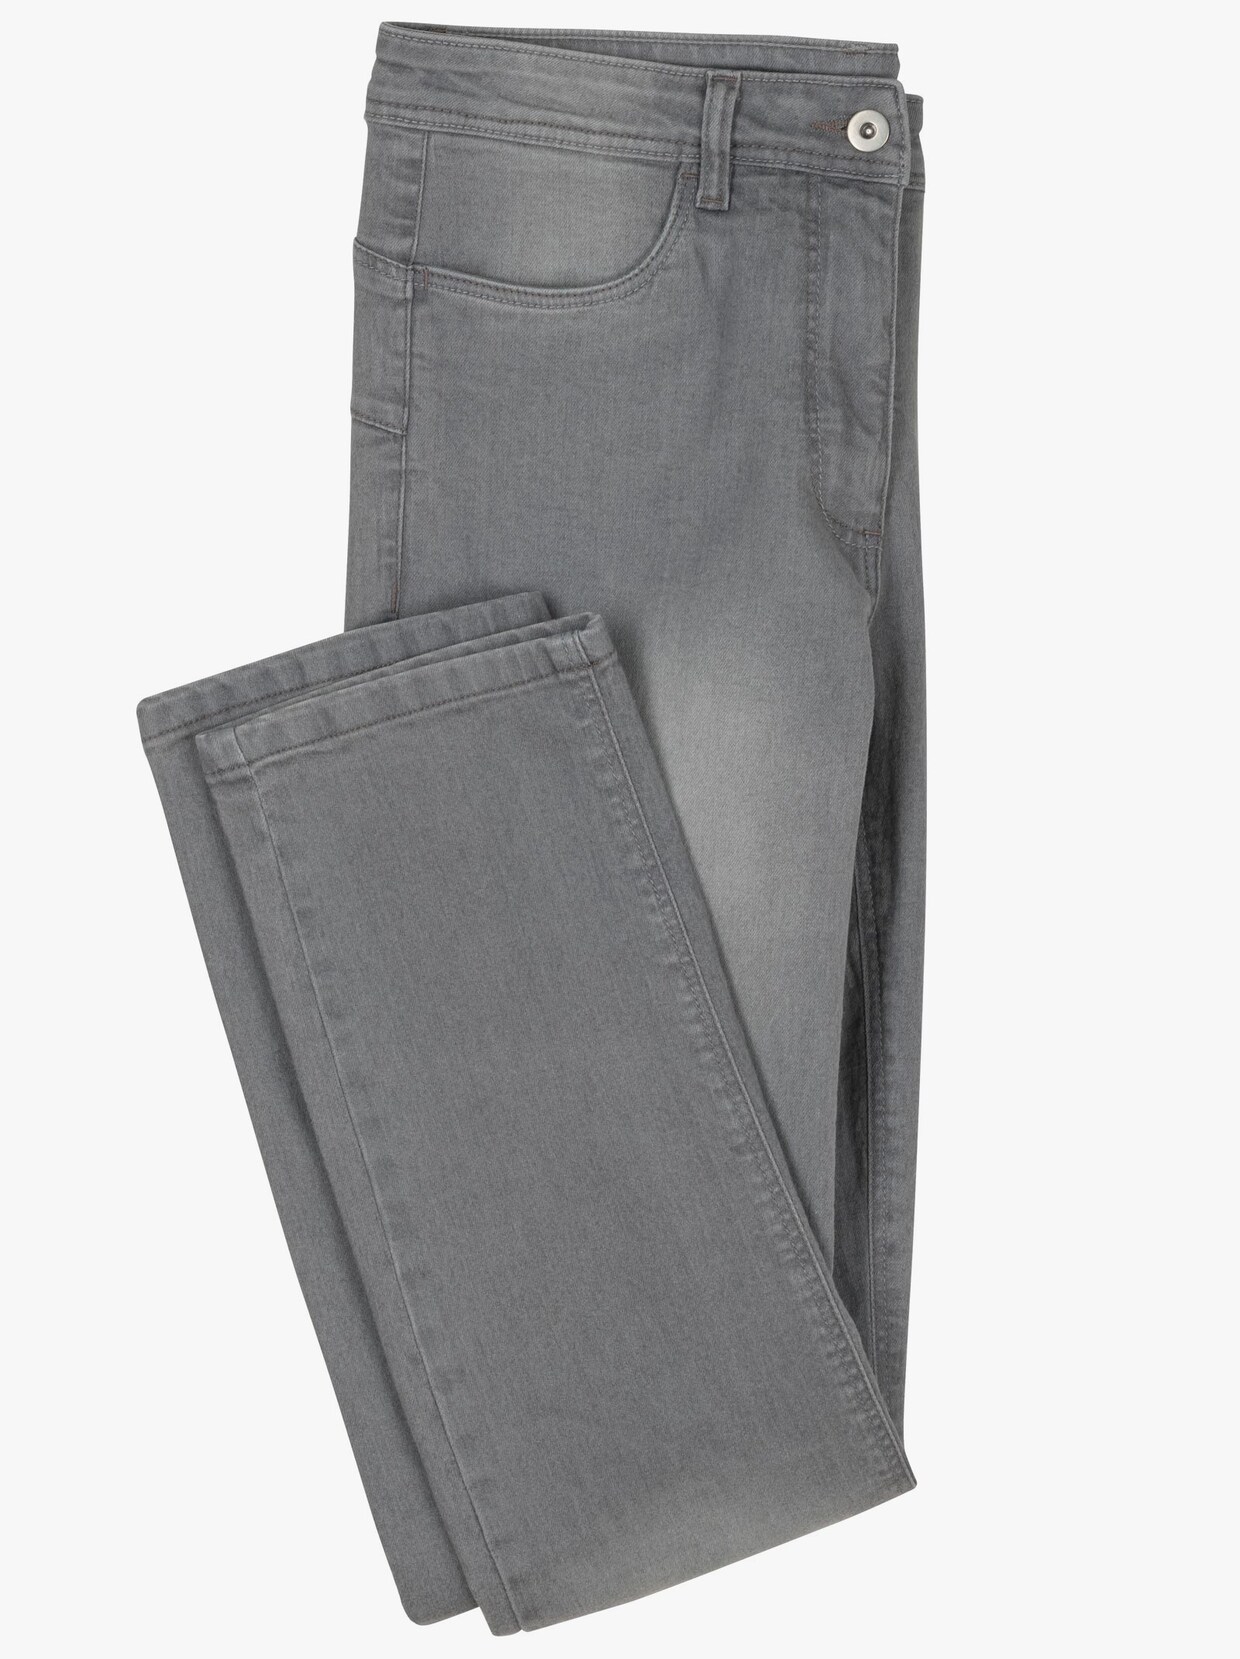 jeans - grey-denim